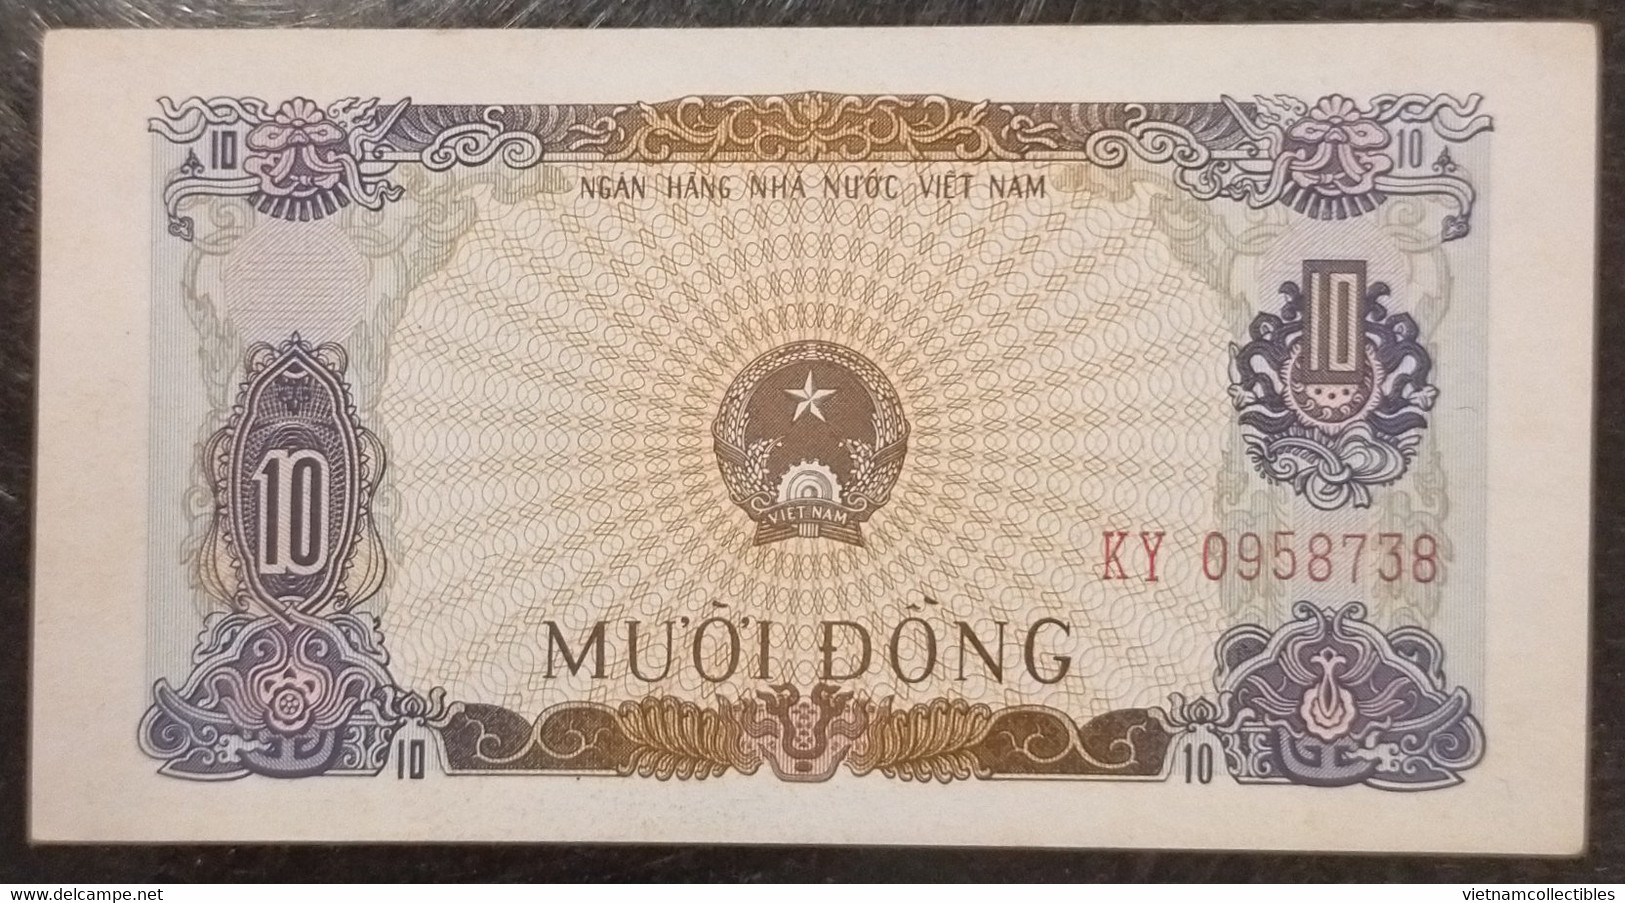 Viet Nam Vietnam 10 Dong UNC Banknote Note 1976 - Pick # 82 / 02 Photos - Vietnam